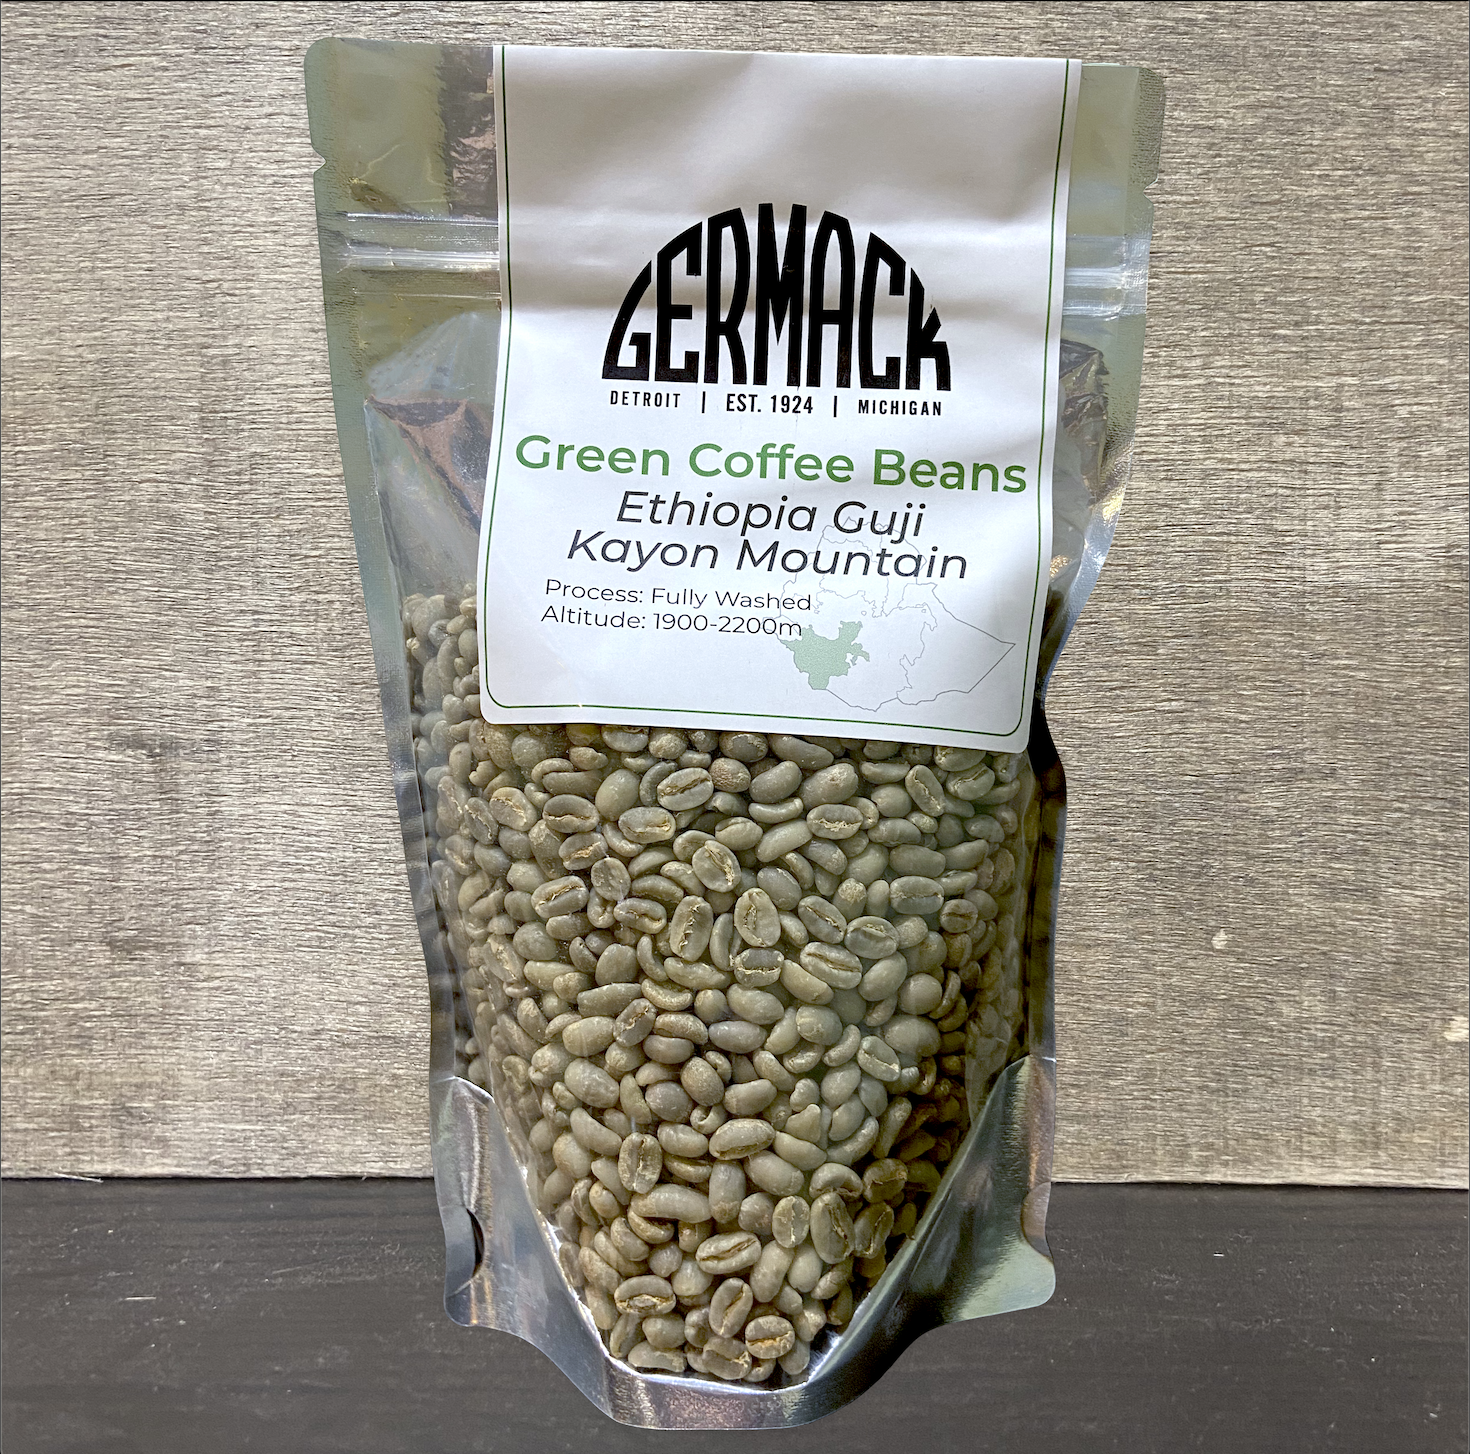 Picture Germack Green Coffee Beans (1 lb) - Ethiopia Guji Kayon Mountain